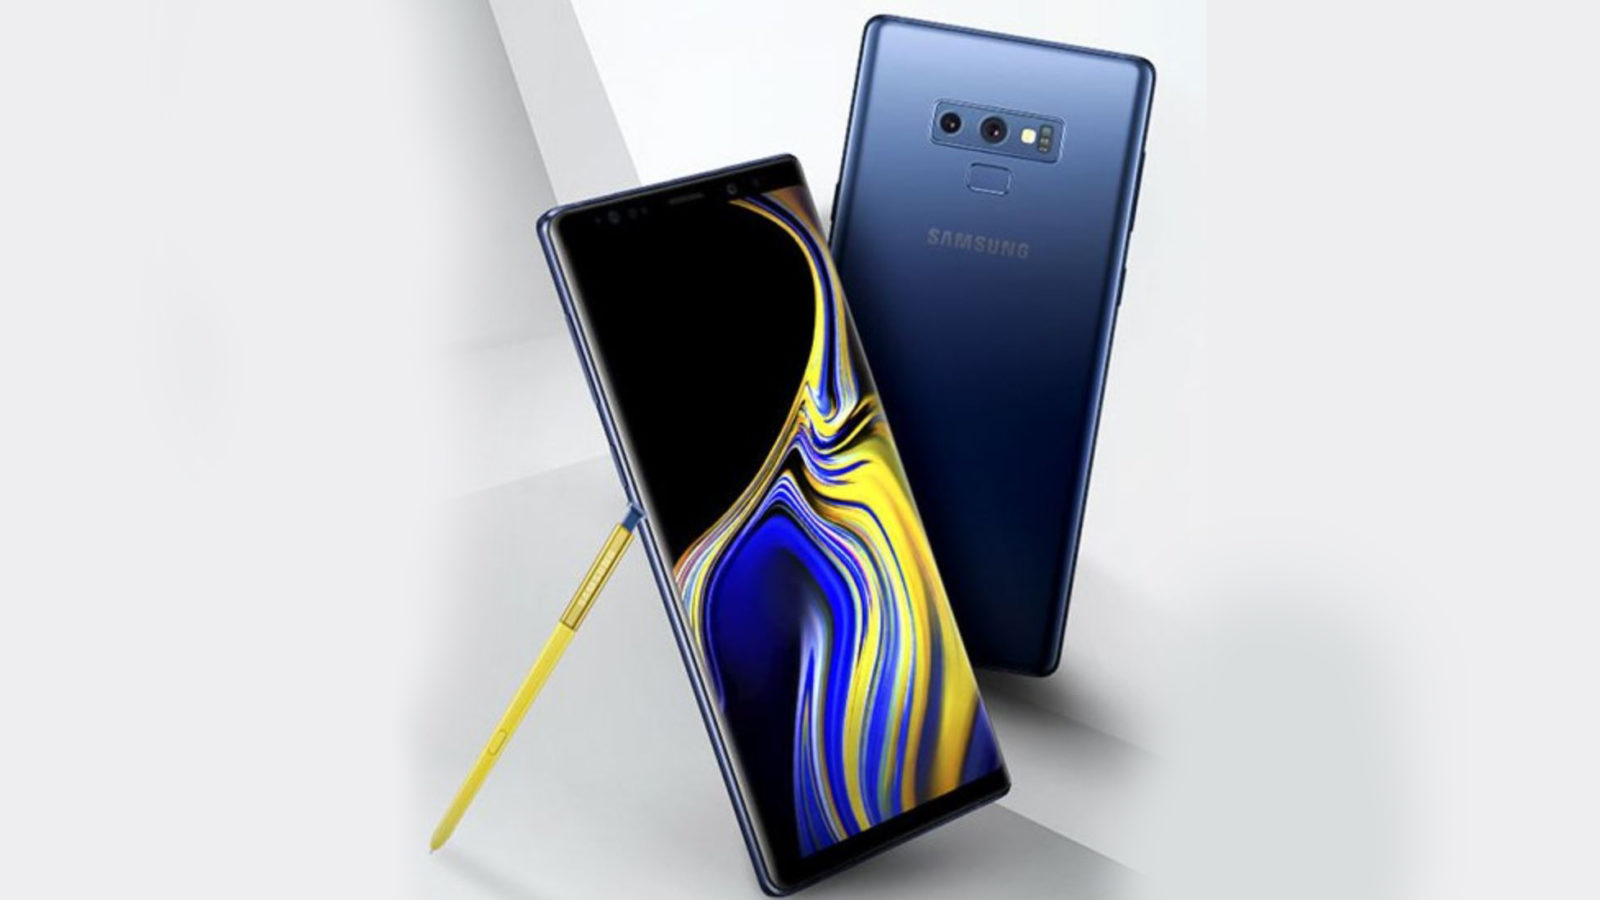 Samsung Galaxy Note 9 Blue Yellow Gold Evan Blass July 17 2018